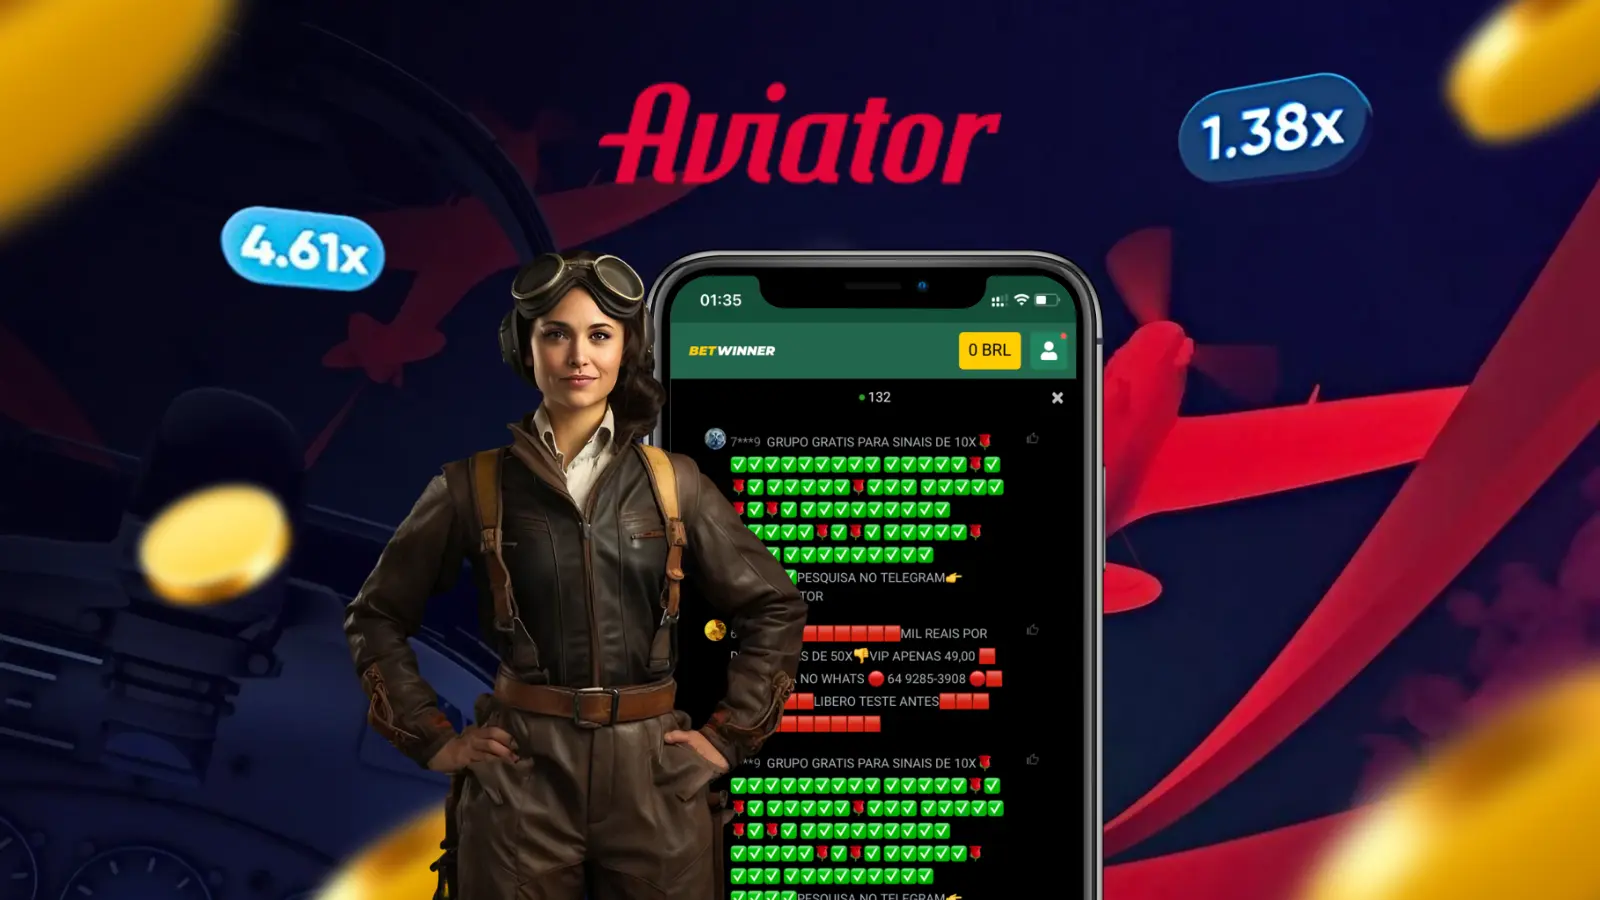 Aviator bet app